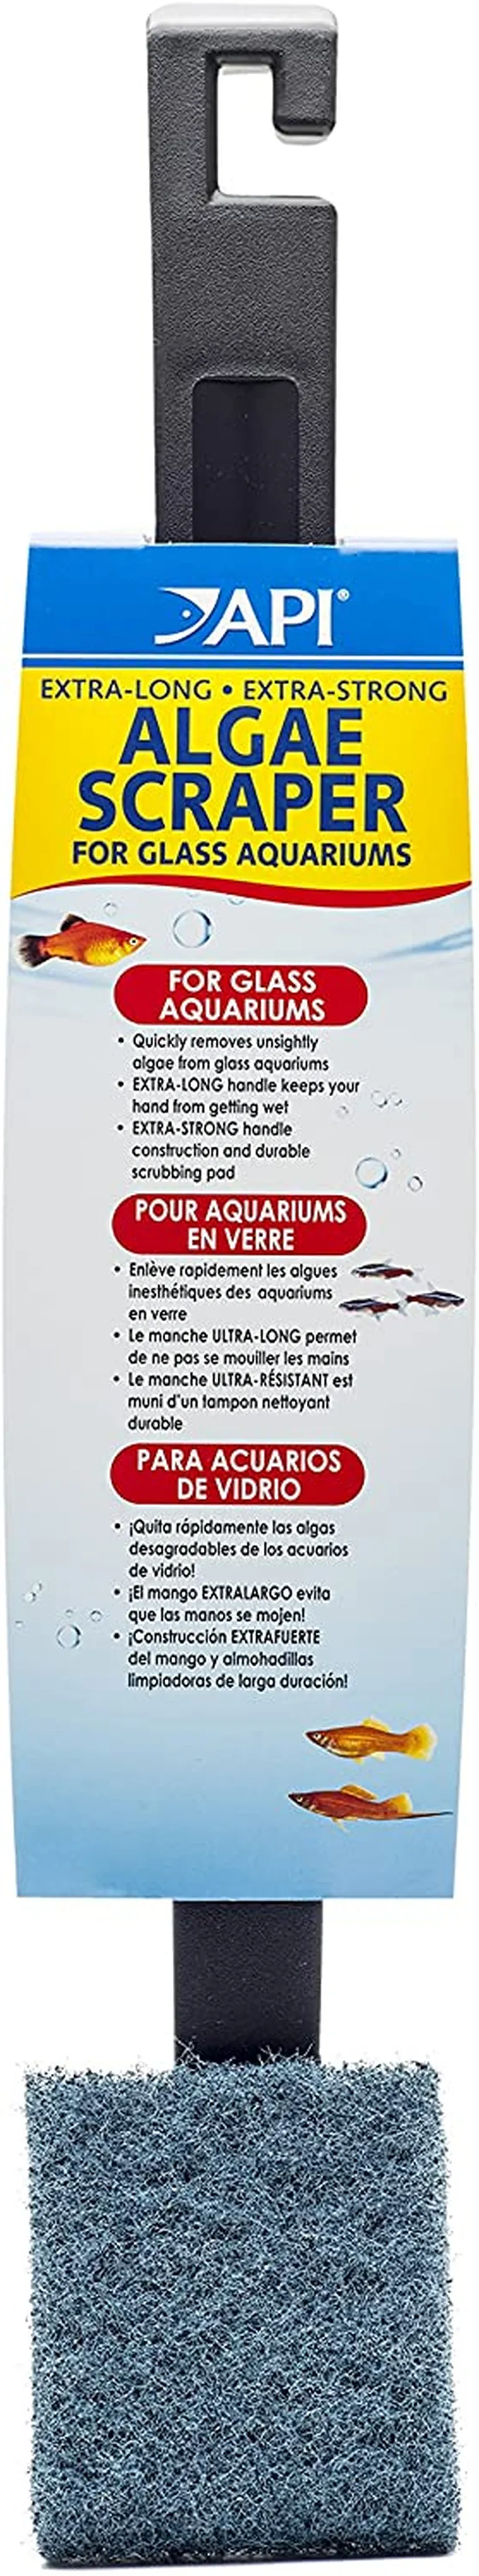 API Algae Scraper for Glass Aquariums Photo 1